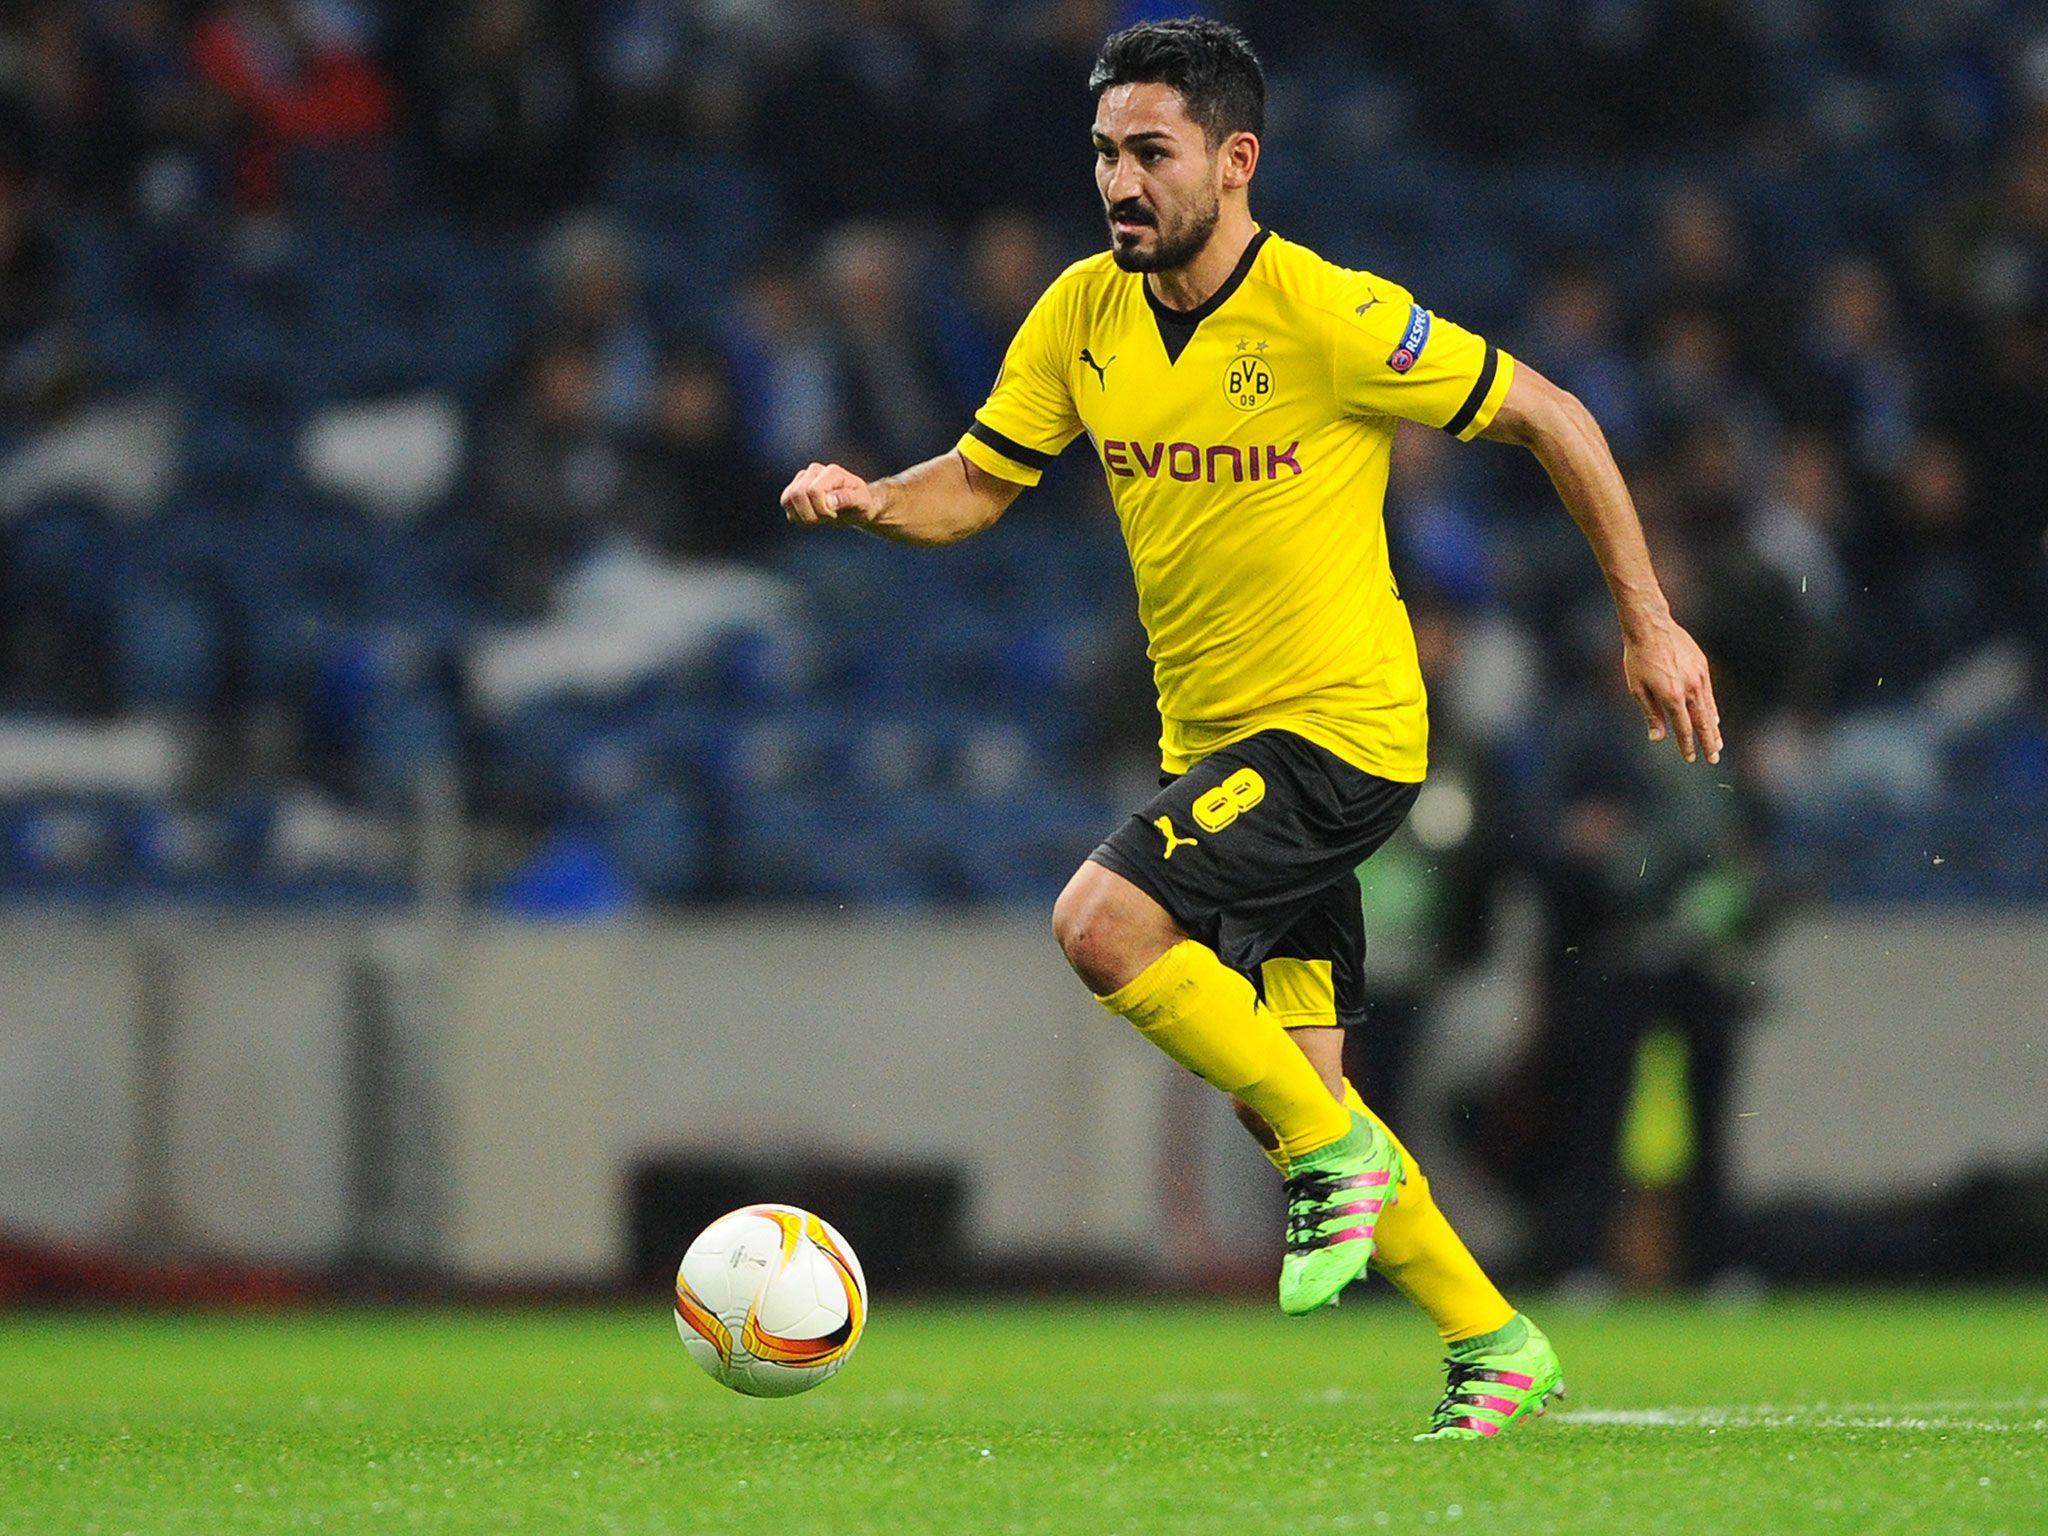 Dortmund midfielder Gundogan to join Man City: Reports